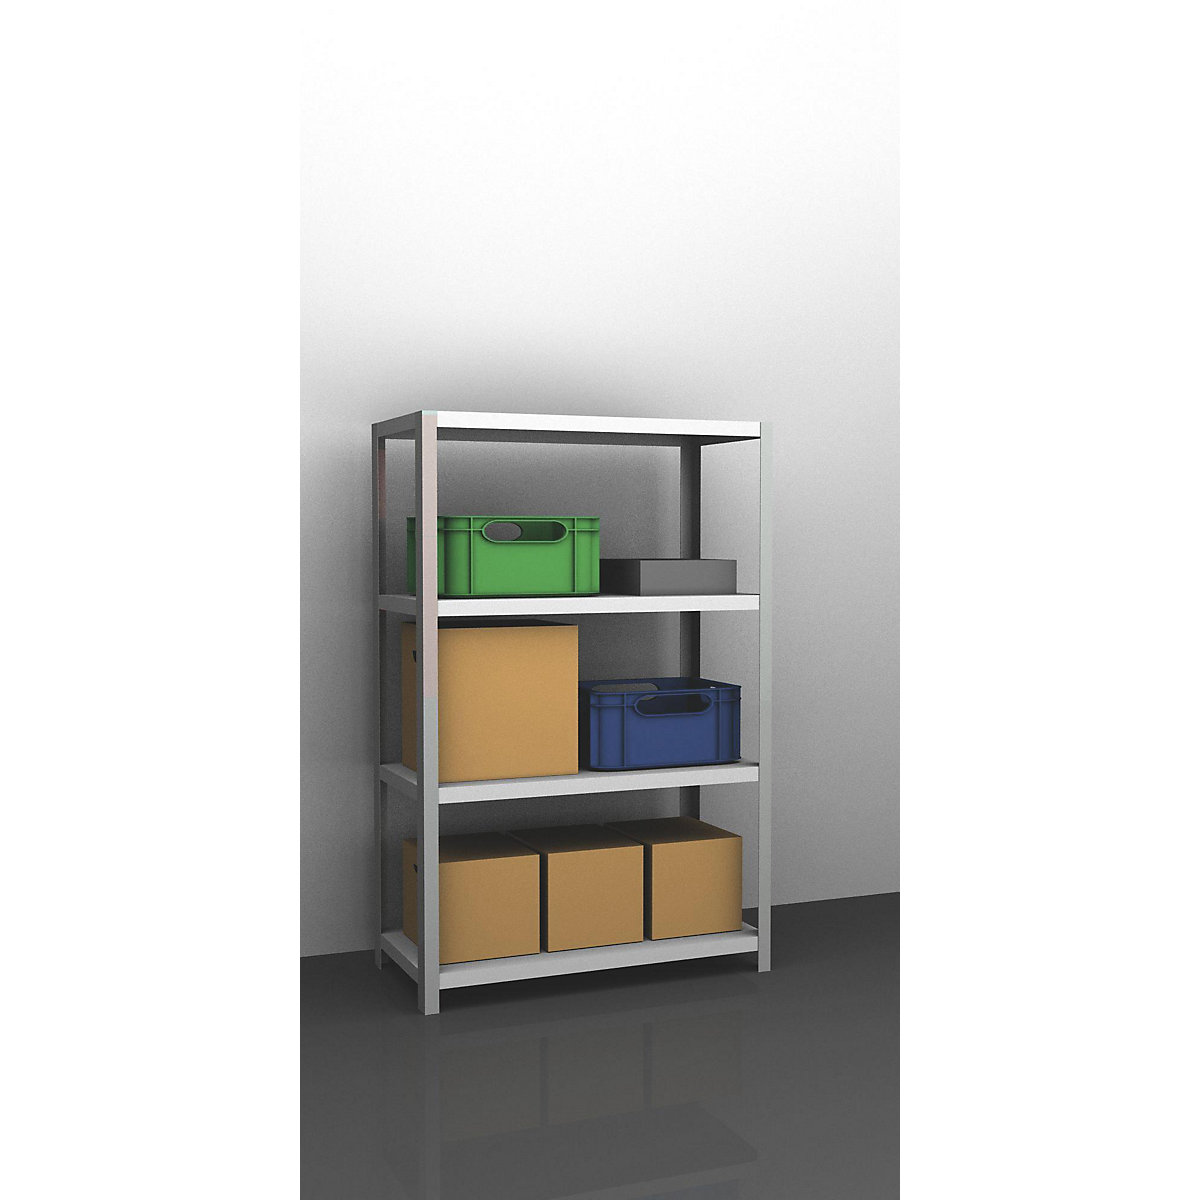 Bolt-together shelf unit, light duty, plastic coated – eurokraft pro, shelf unit height 1500 mm, shelf width 1000 mm, depth 500 mm, standard shelf unit-8